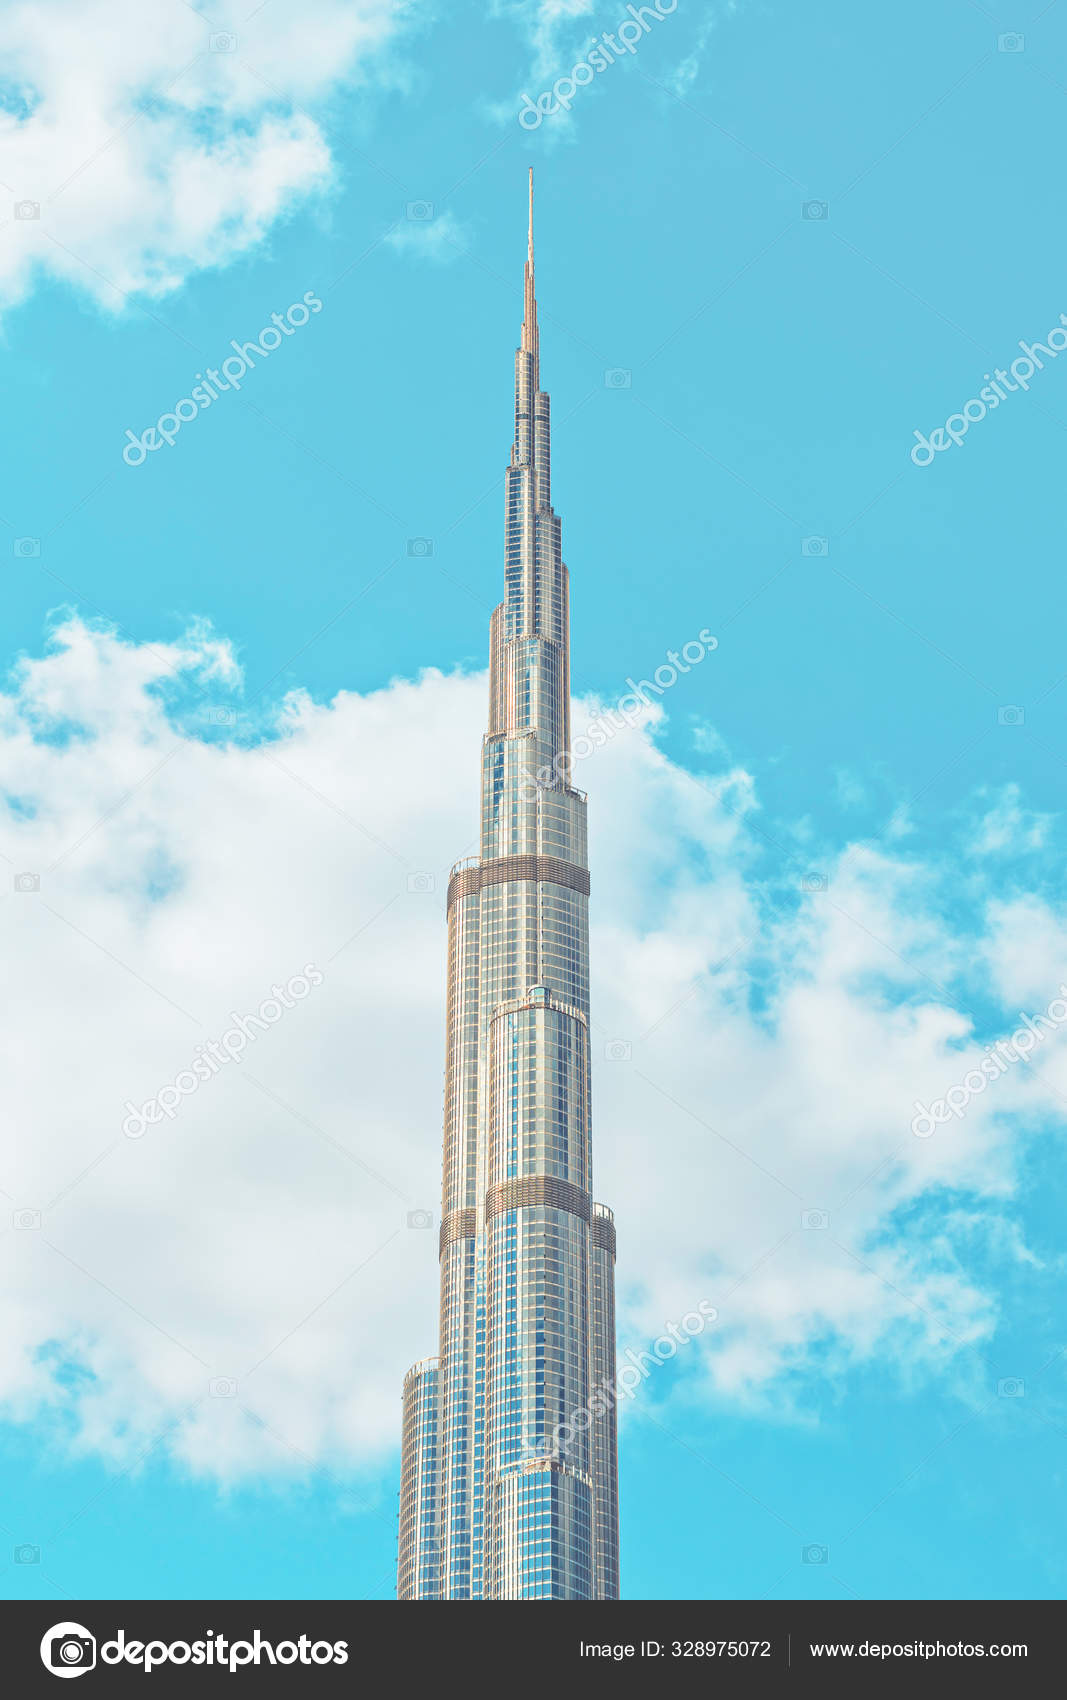 Burj Khalifa skyscraper peeking up in the white clouds with blue ...